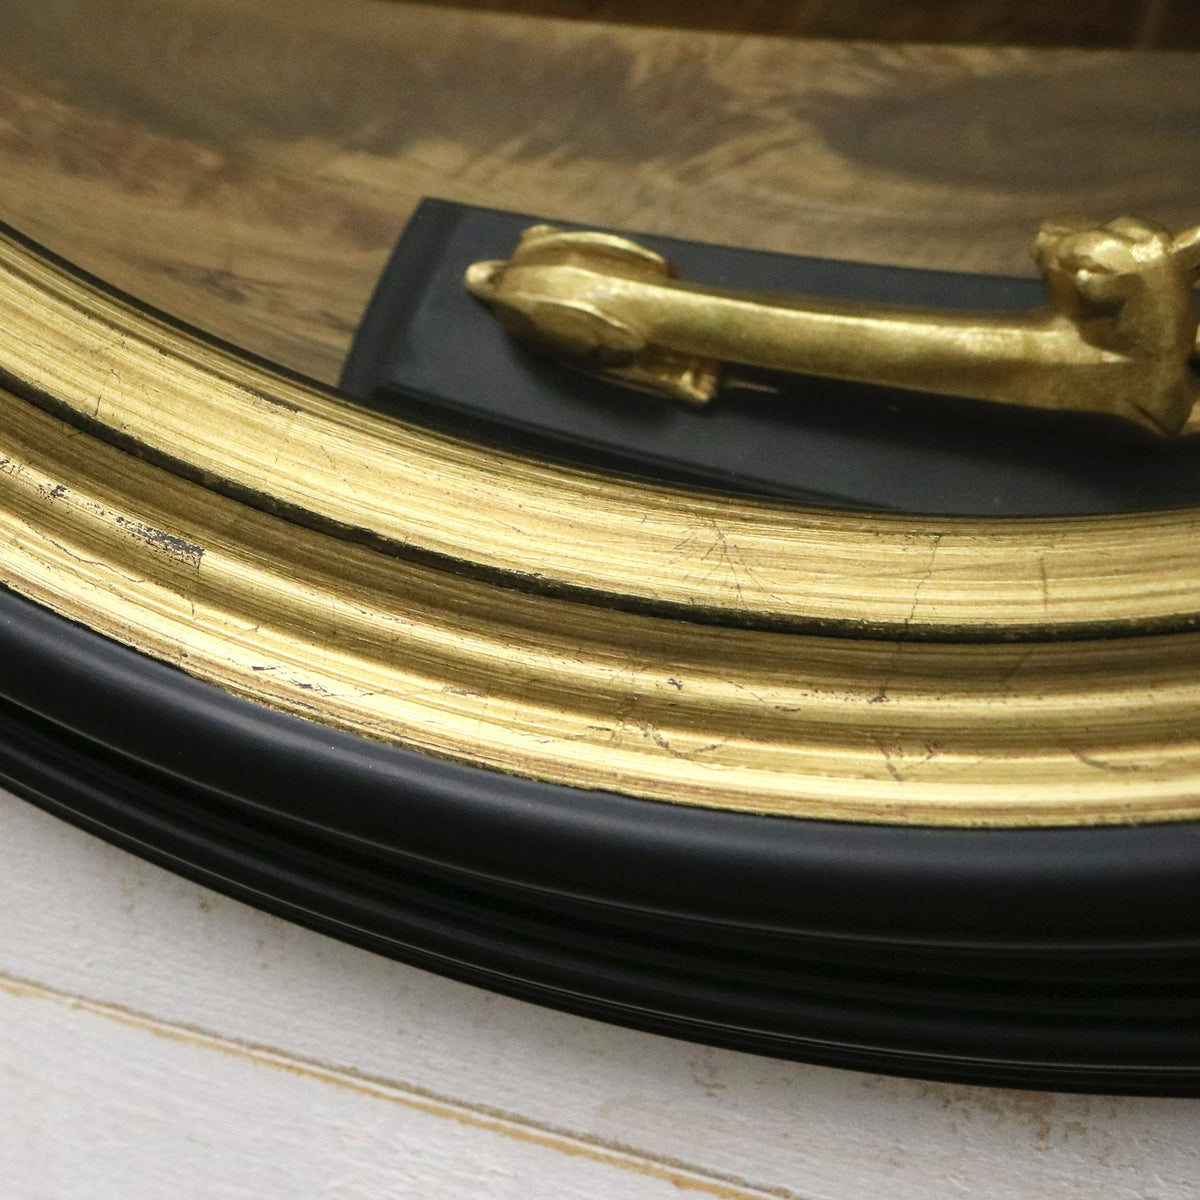 Black and gold porthole fish eye round mirror detail shot of 2 layered frame